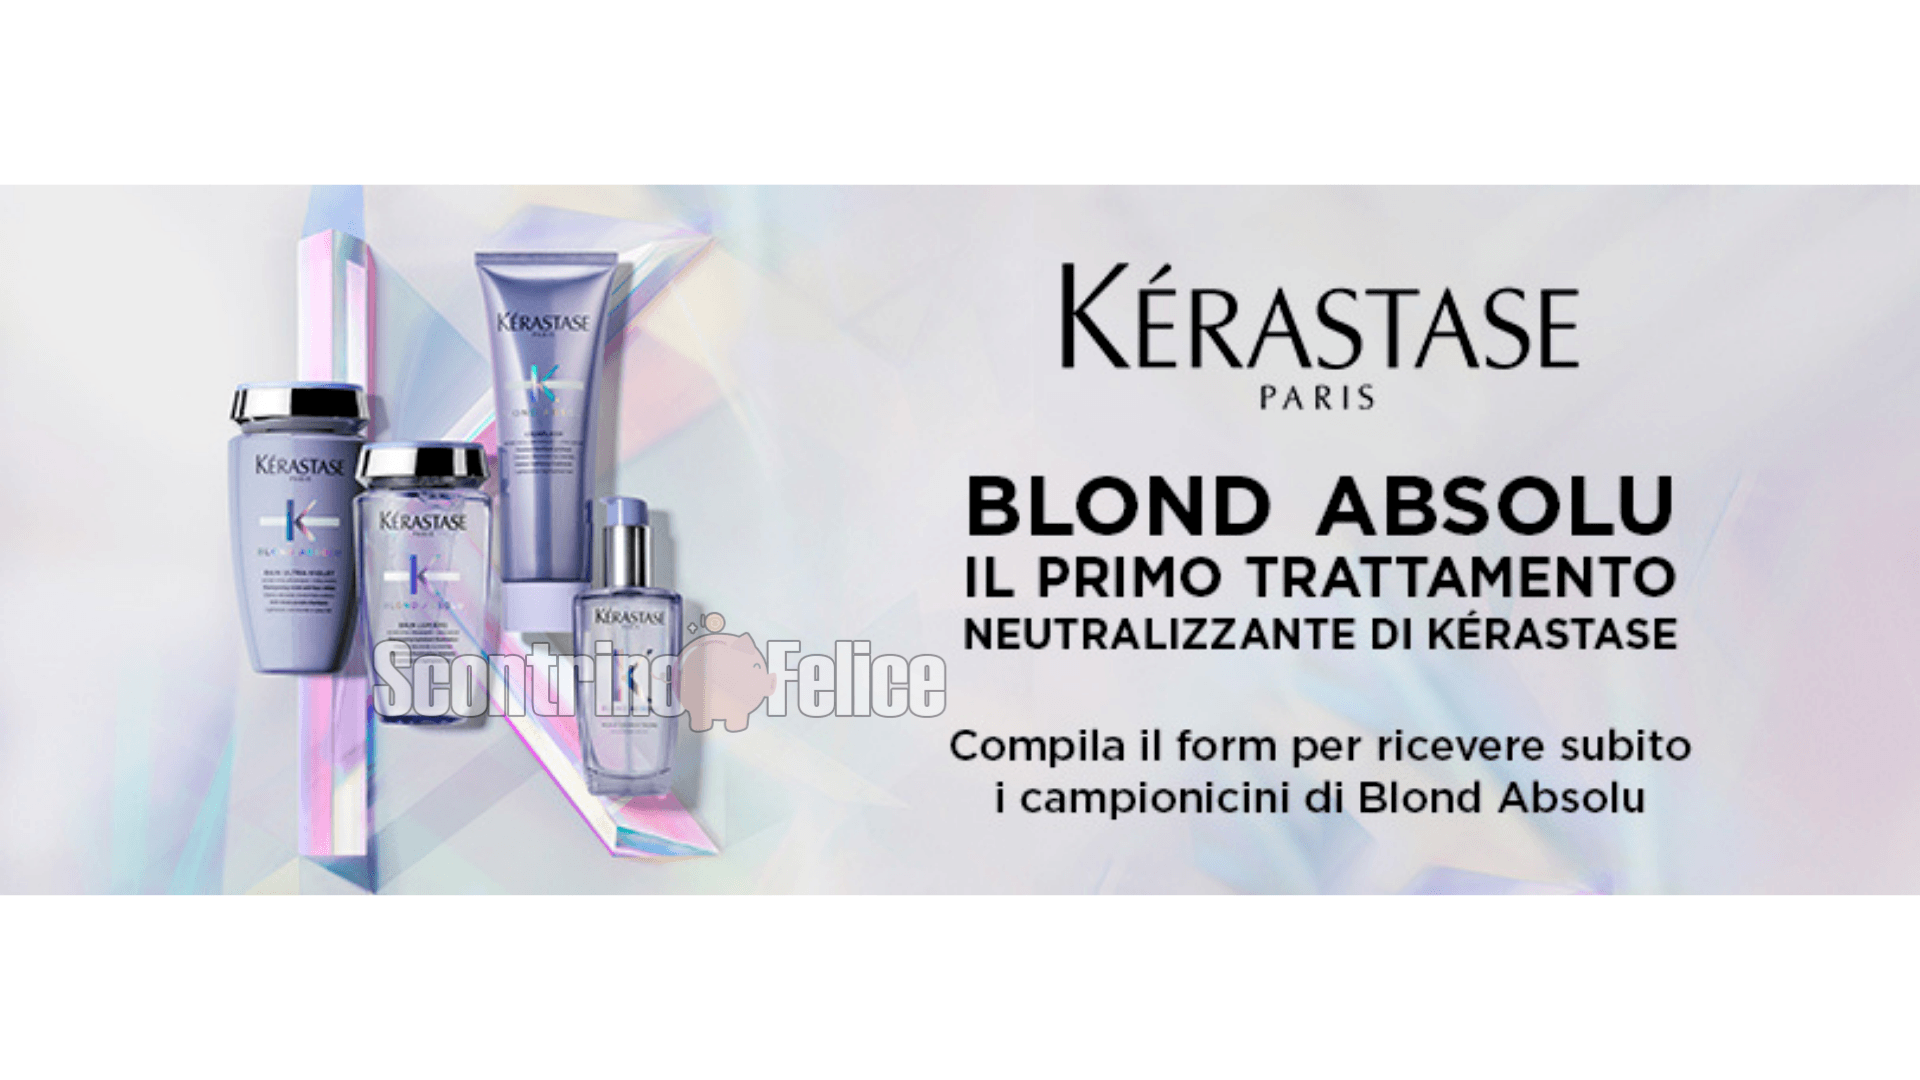 Campioni omaggio Kérastase Blond Absolu da richiedere subito! 4